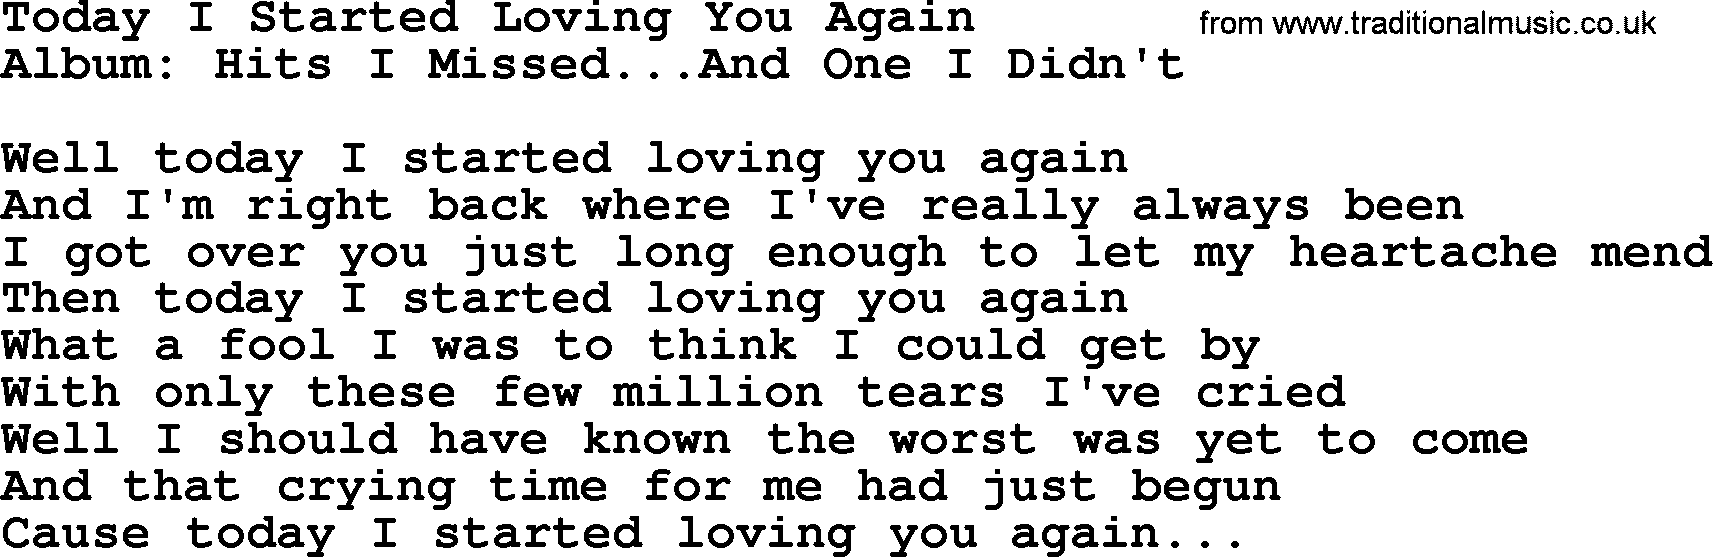 George Jones song: Today I Started Loving You Again, lyrics